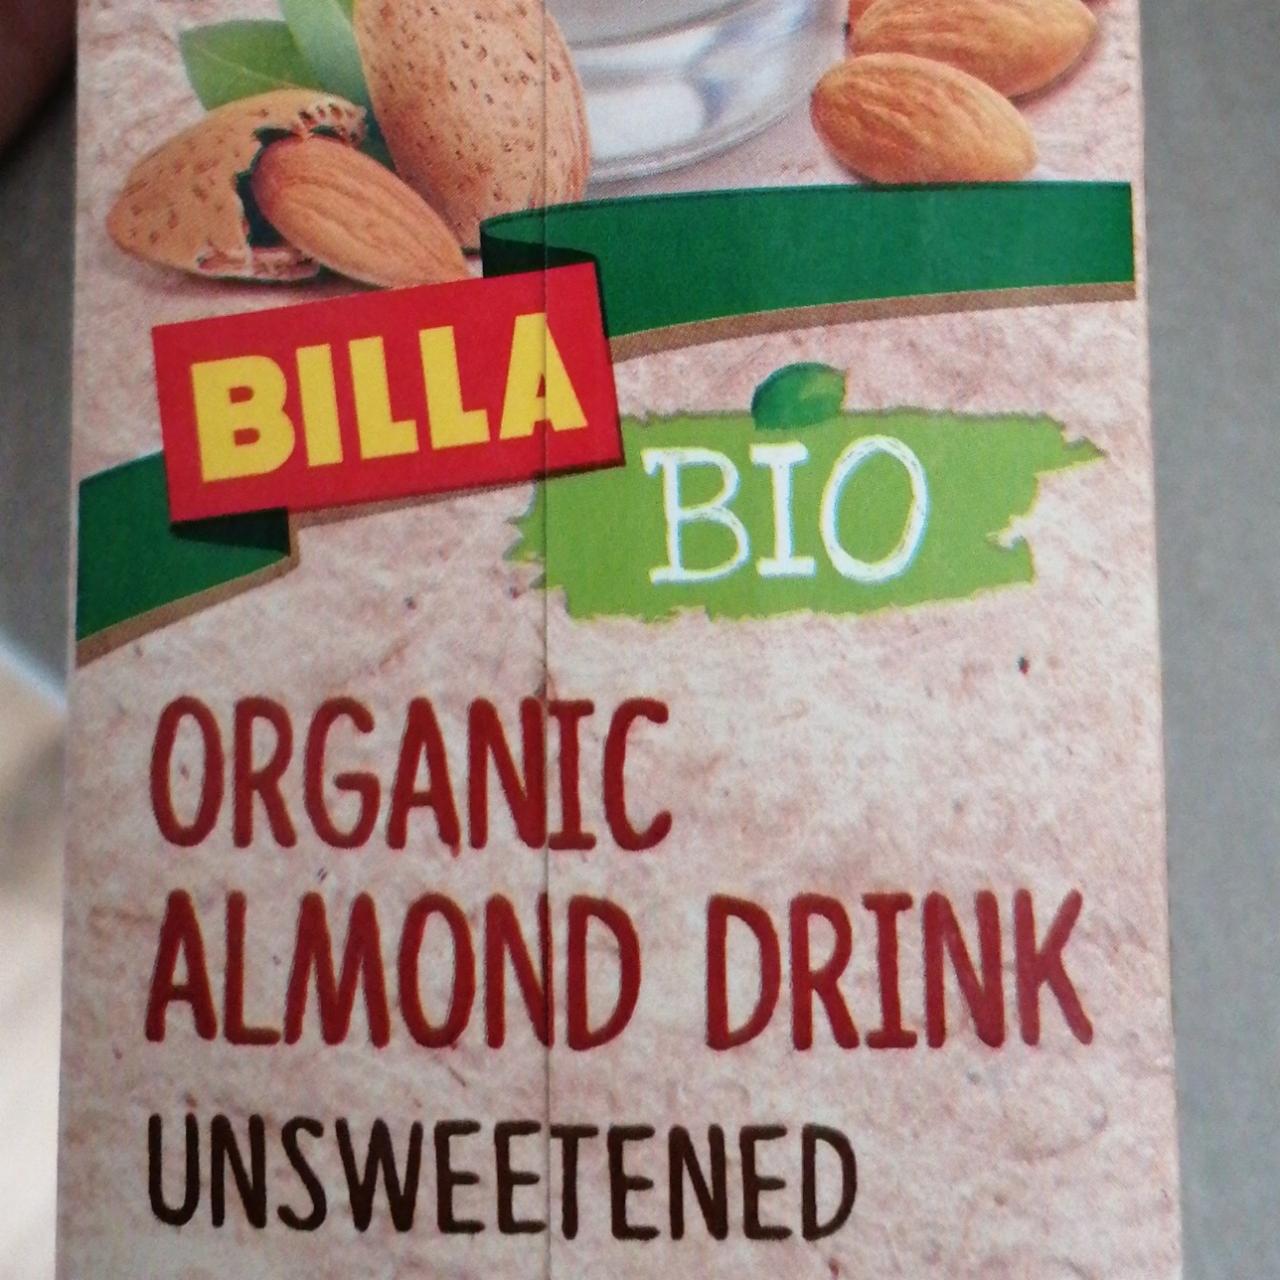 Fotografie - Organic Almond Drink Unsweetened Billa Bio